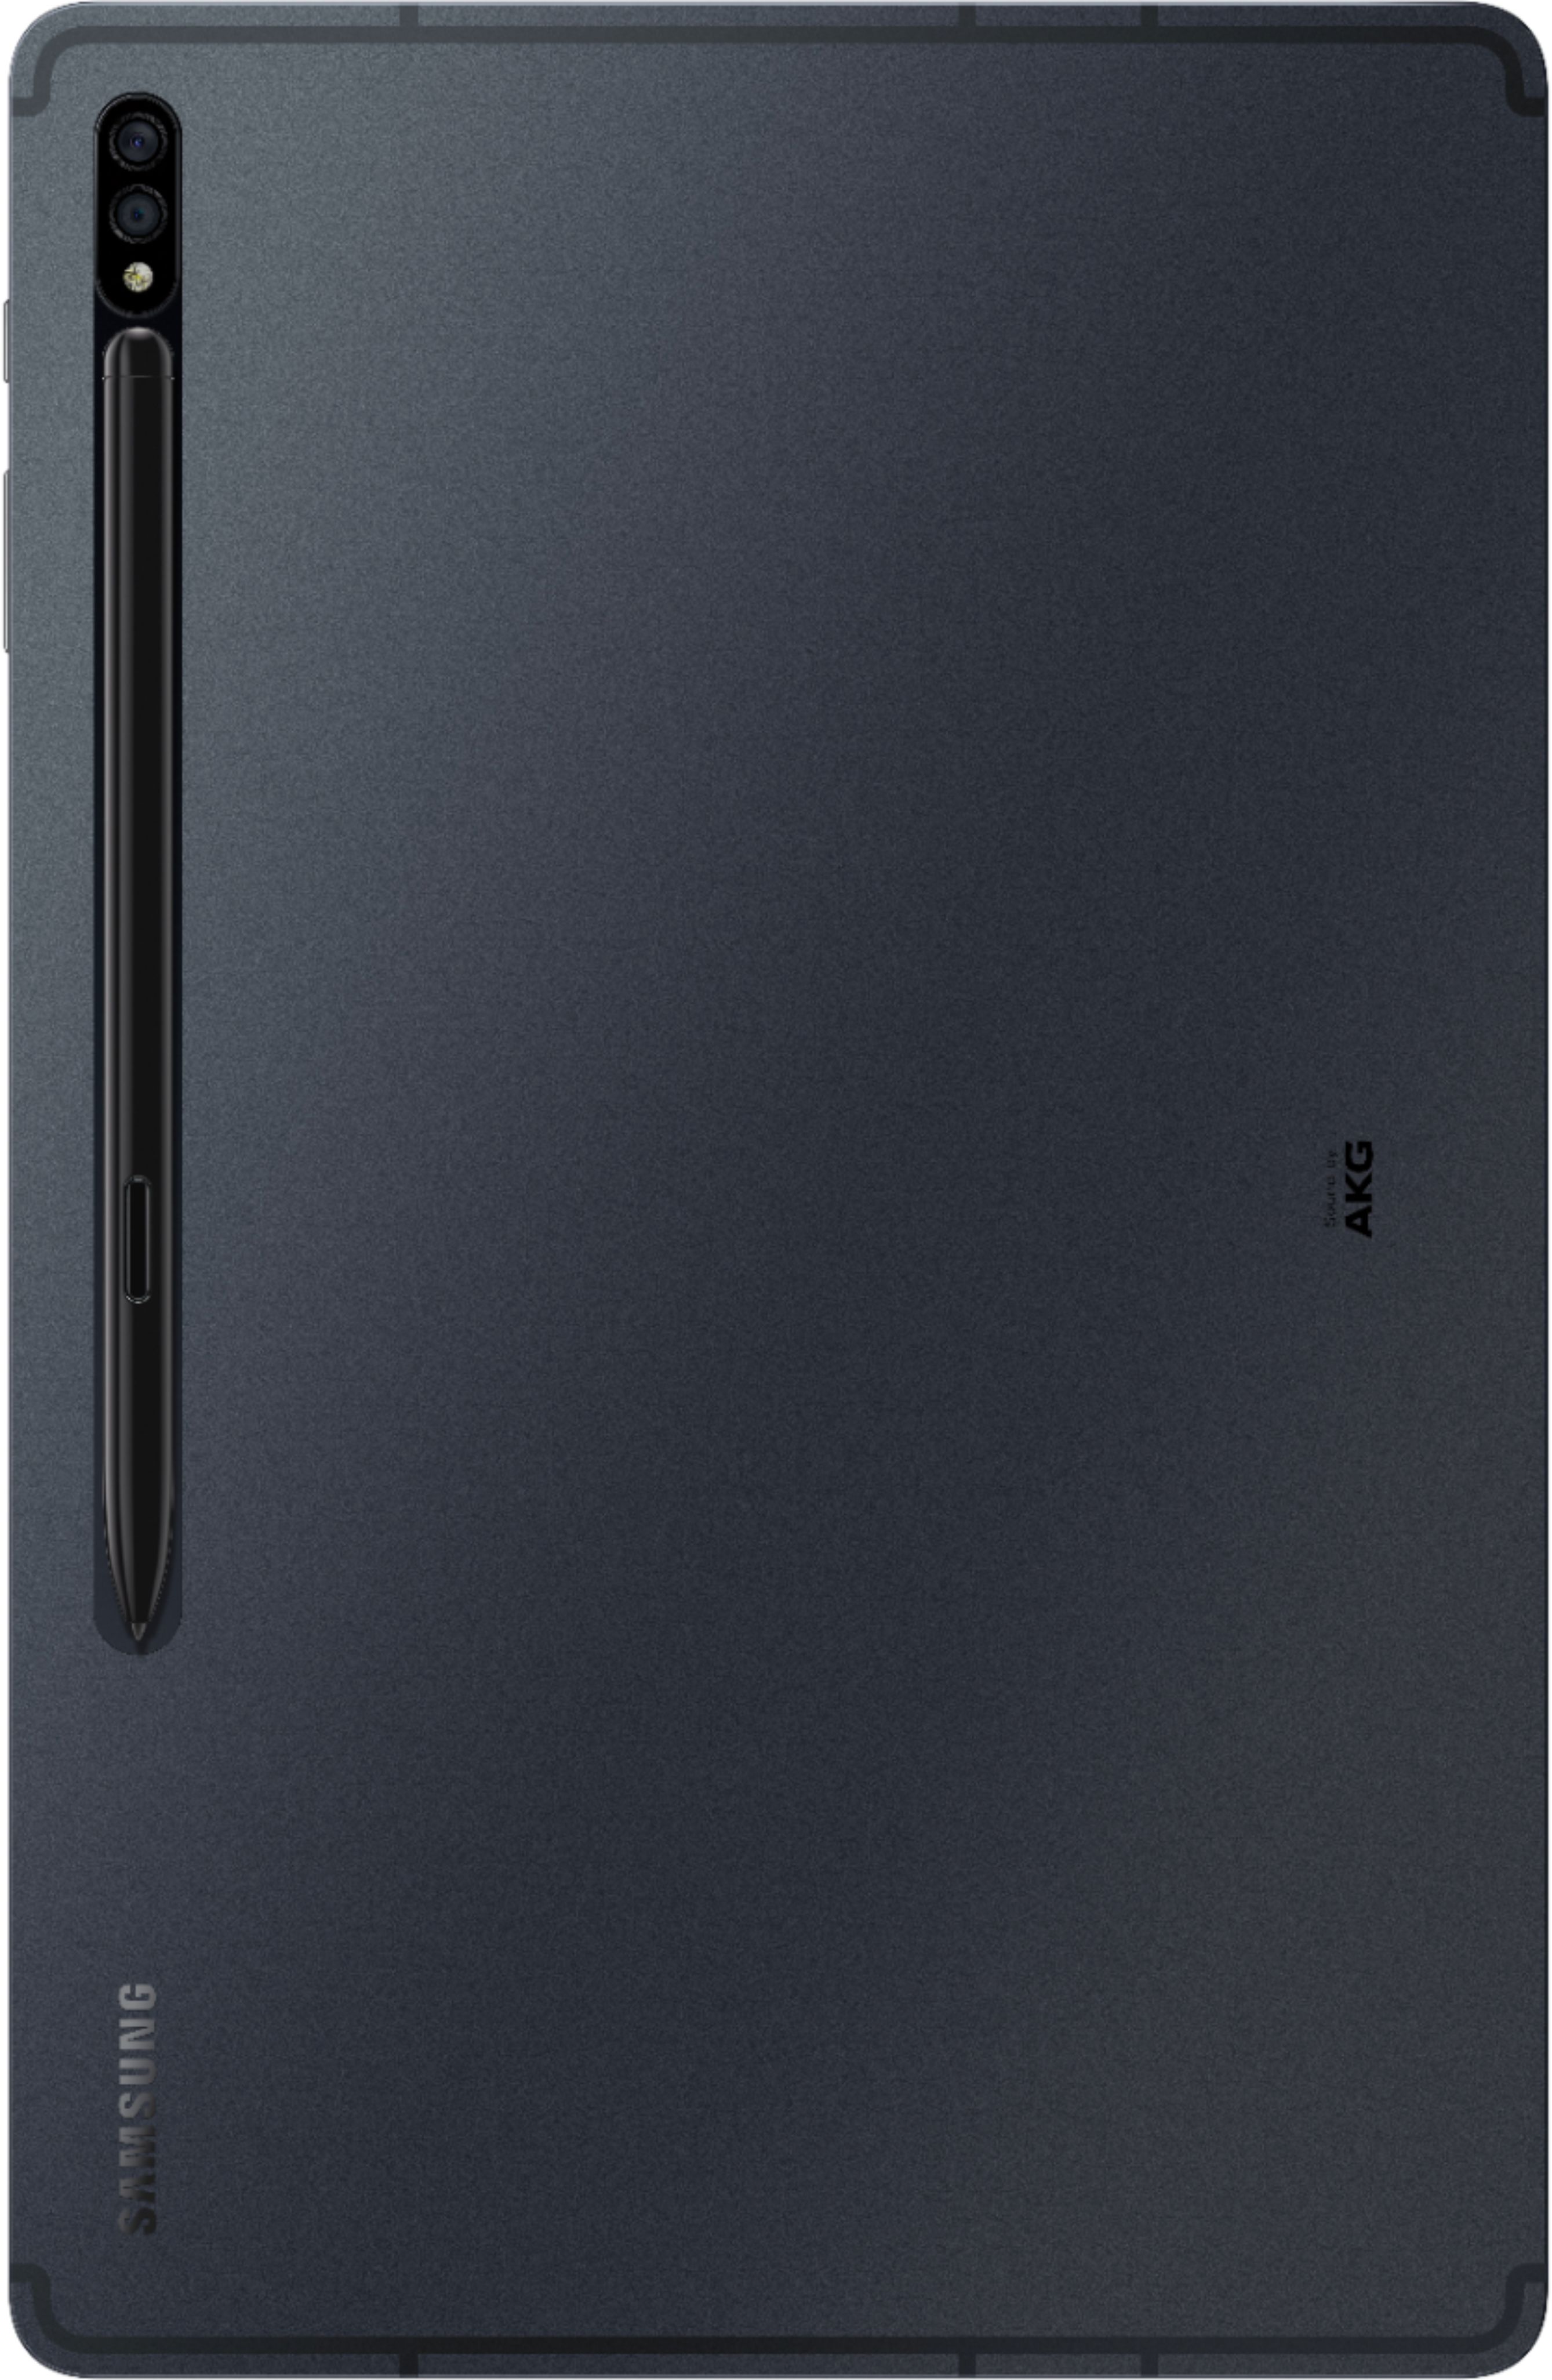 Back View: Samsung - Galaxy Tab S7 Plus - 12.4” - 256GB - With S Pen - Wi-Fi - Mystic Black